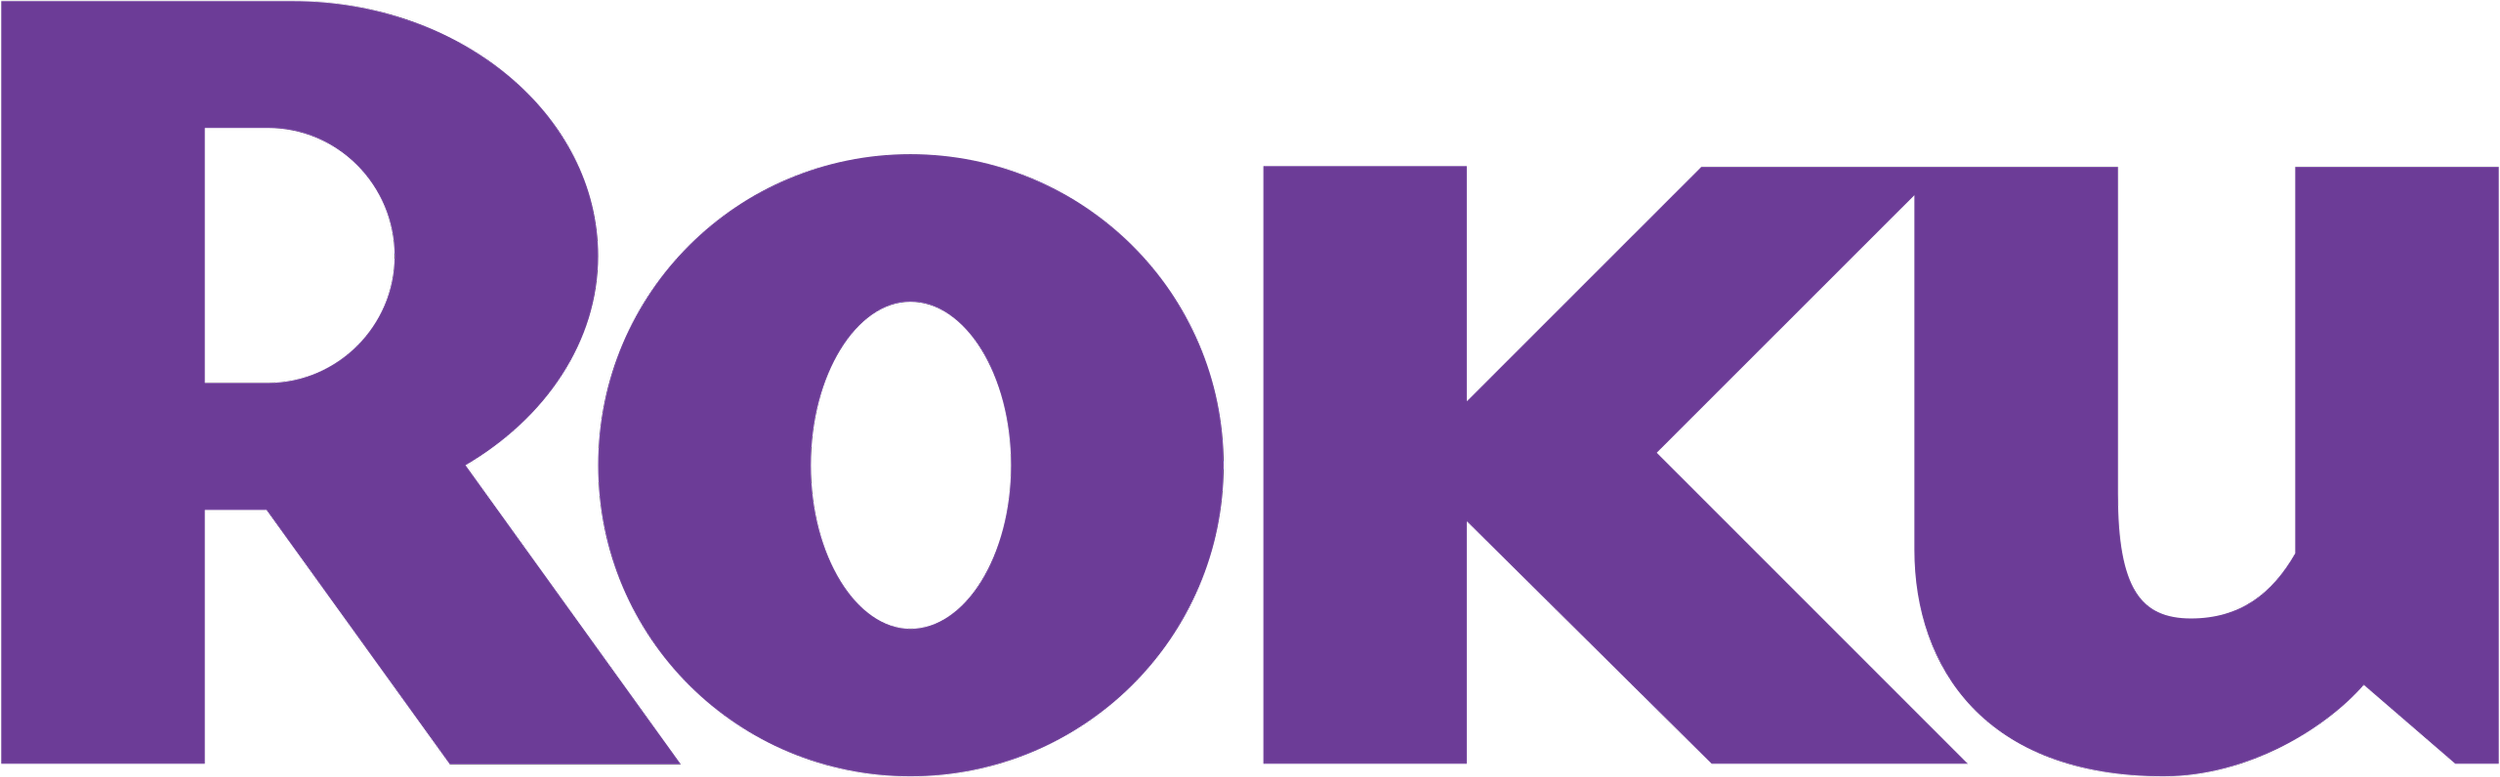 2560px-Roku_logo.svg.png